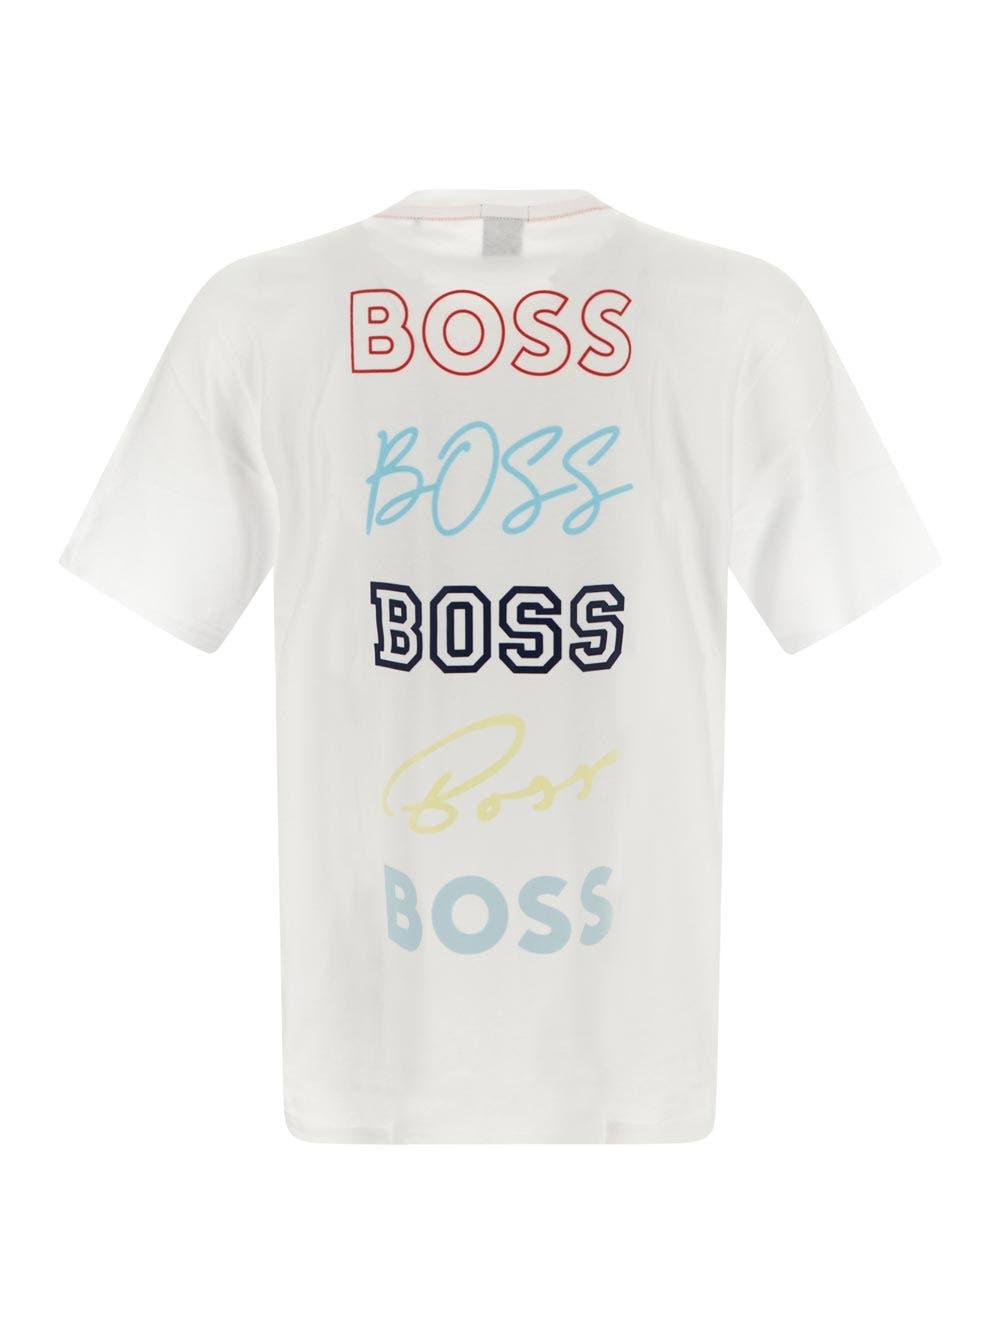 BOSS by HUGO BOSS Cotton Logo T-shirt in Black for Men Save 24% Mens T-shirts BOSS by HUGO BOSS T-shirts 